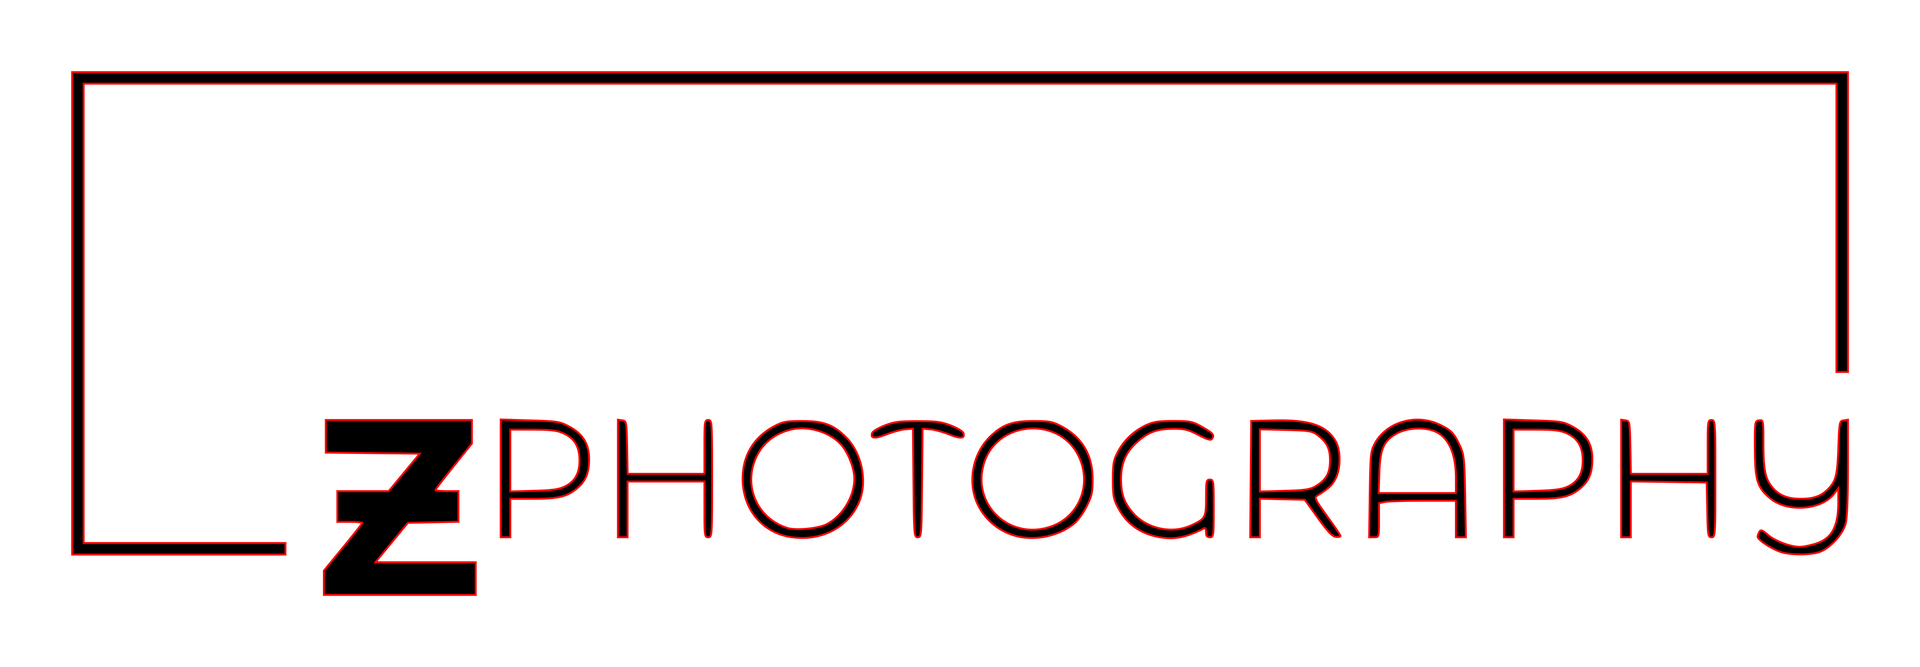 zphotography logo